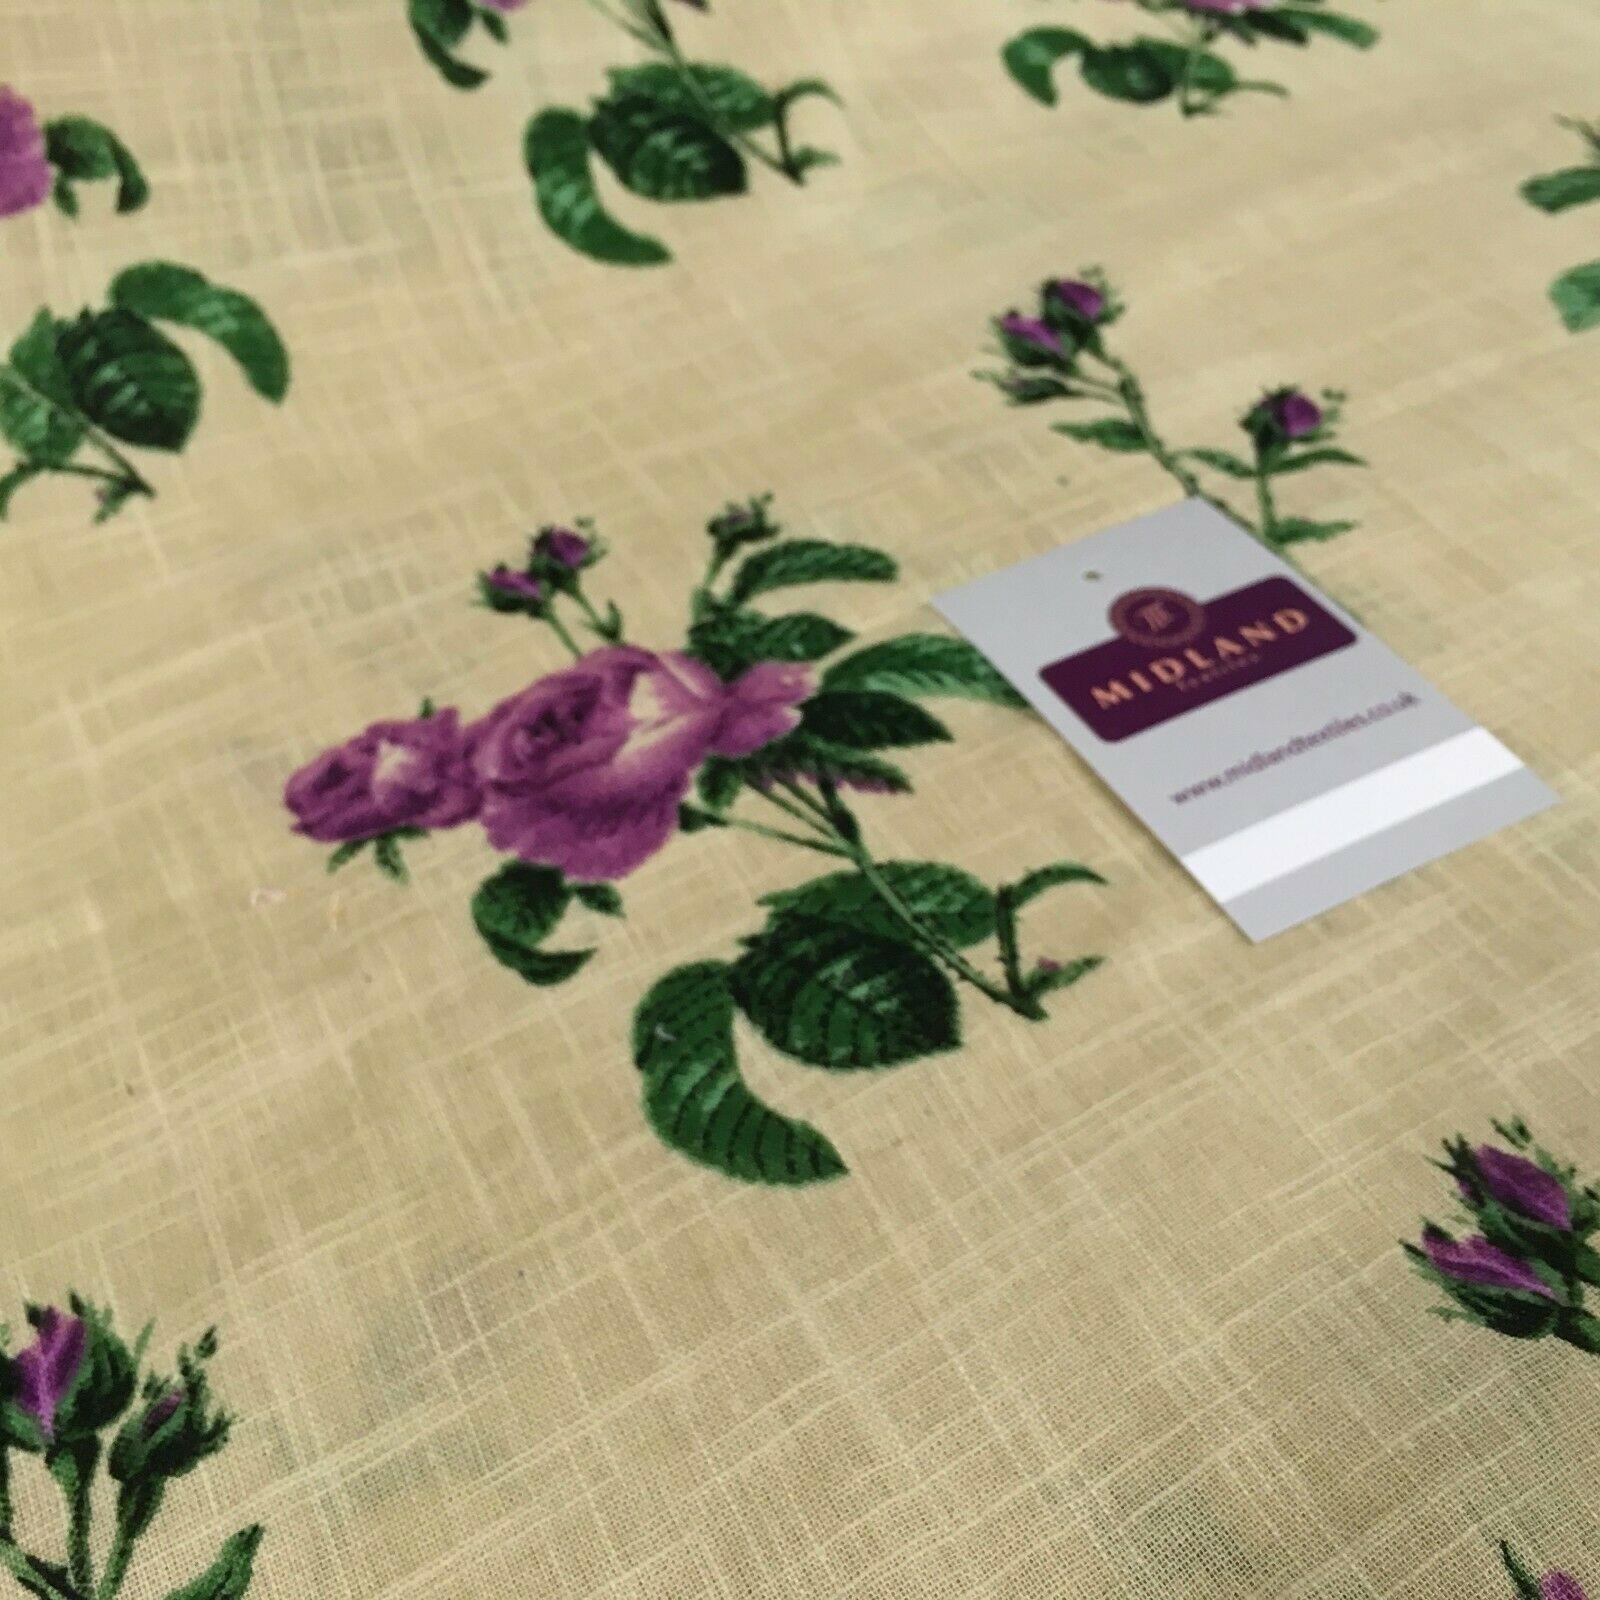 Natural Vintage Floral Printed Linen Dress Fabric 110 cm M1192 Mtex